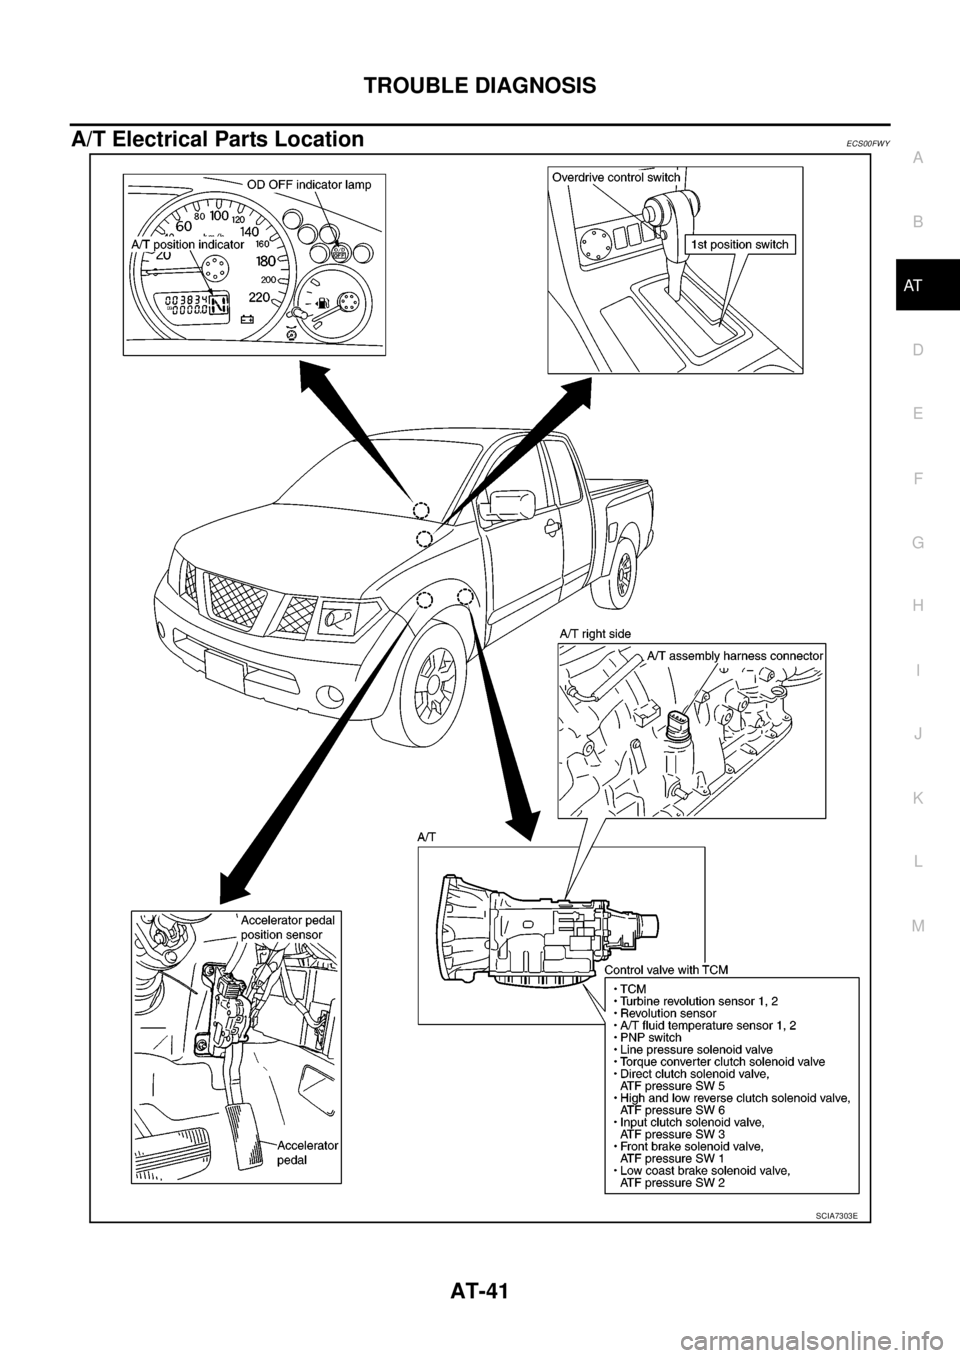 NISSAN NAVARA 2005  Repair Service Manual TROUBLE DIAGNOSIS
AT-41
D
E
F
G
H
I
J
K
L
MA
B
AT
A/T Electrical Parts LocationECS00FWY
SCIA7303E 